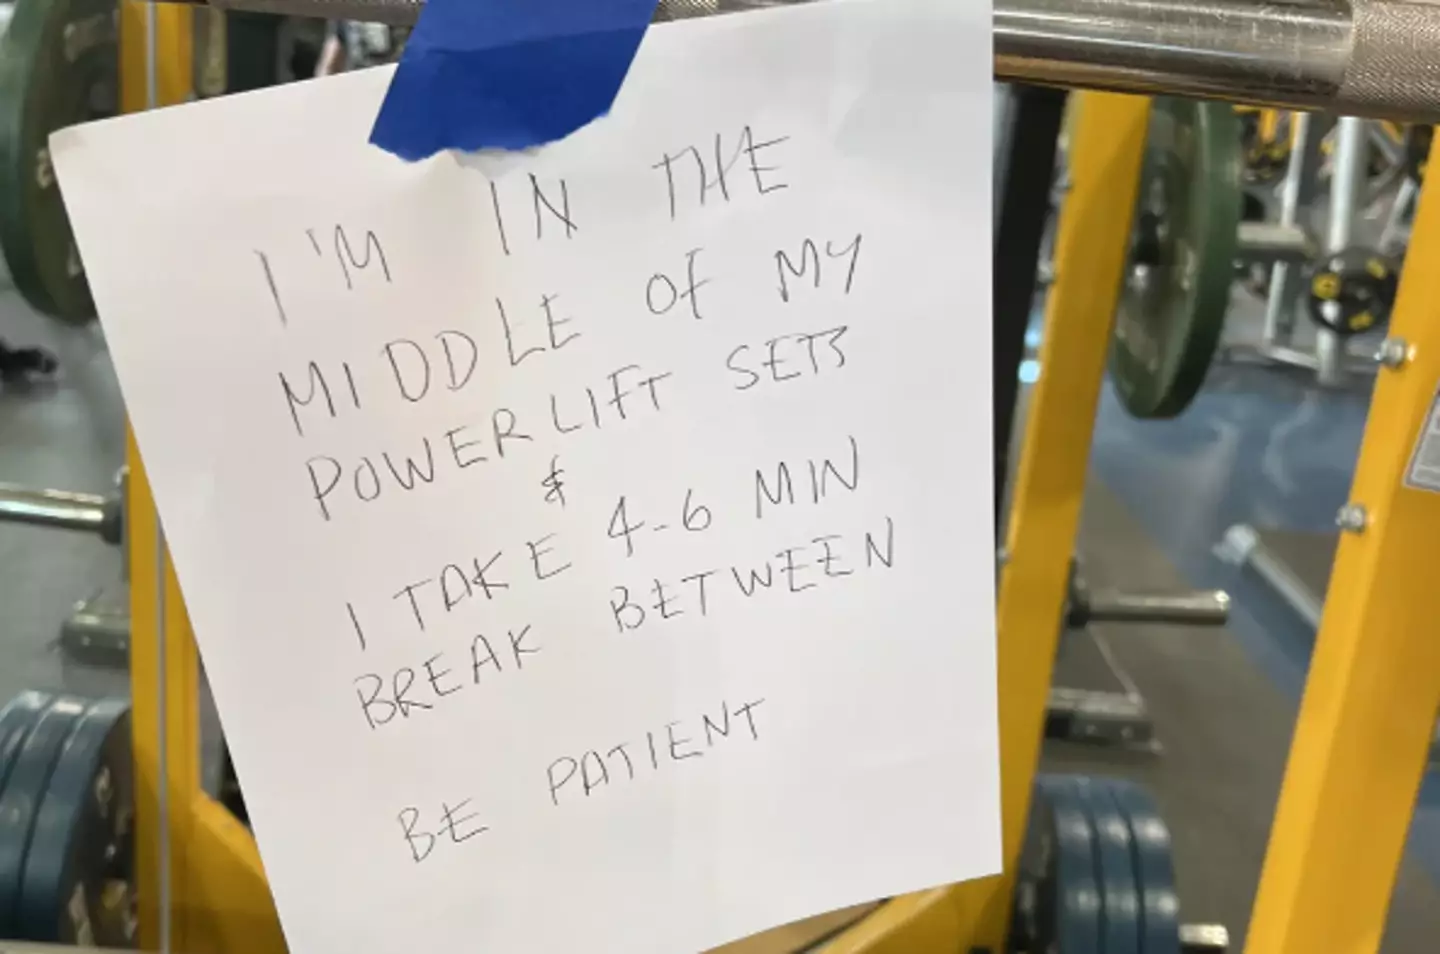 The note urged people to 'be patient'. (Reddit/u/4ArgumentsSake)